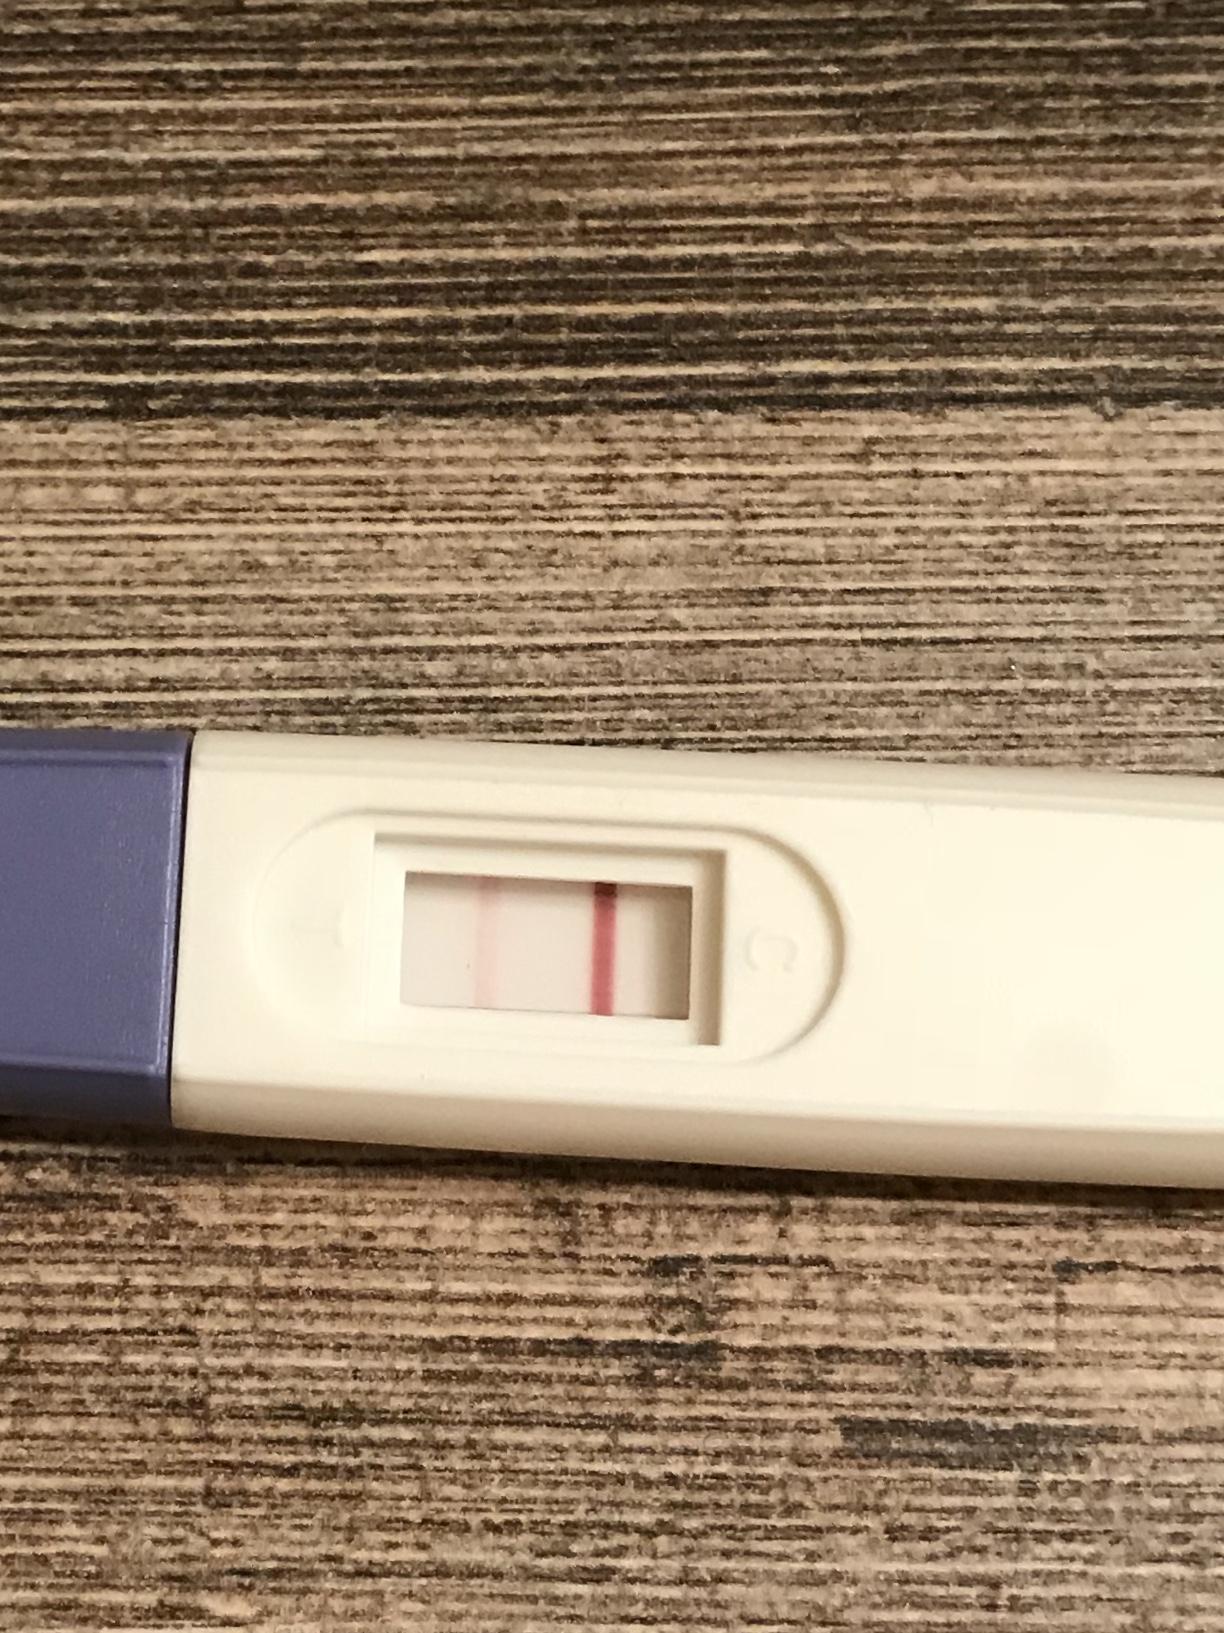 a1 graviditetstest